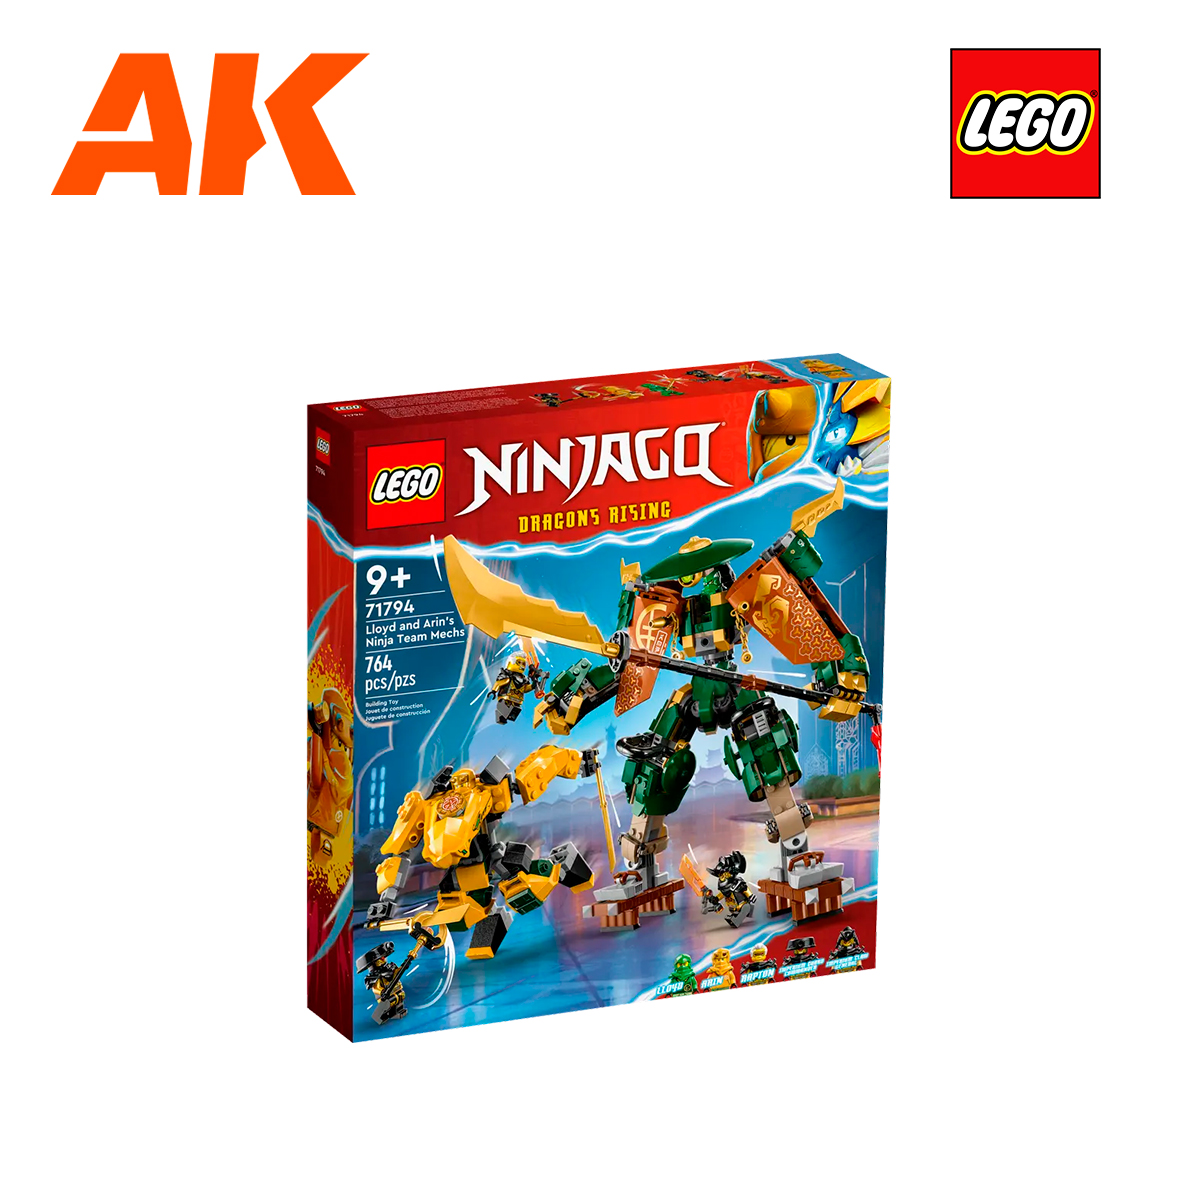 LEGO 71794 Ninjago Dragons Rising Lloyd and Arin's Ninja Team Mechs